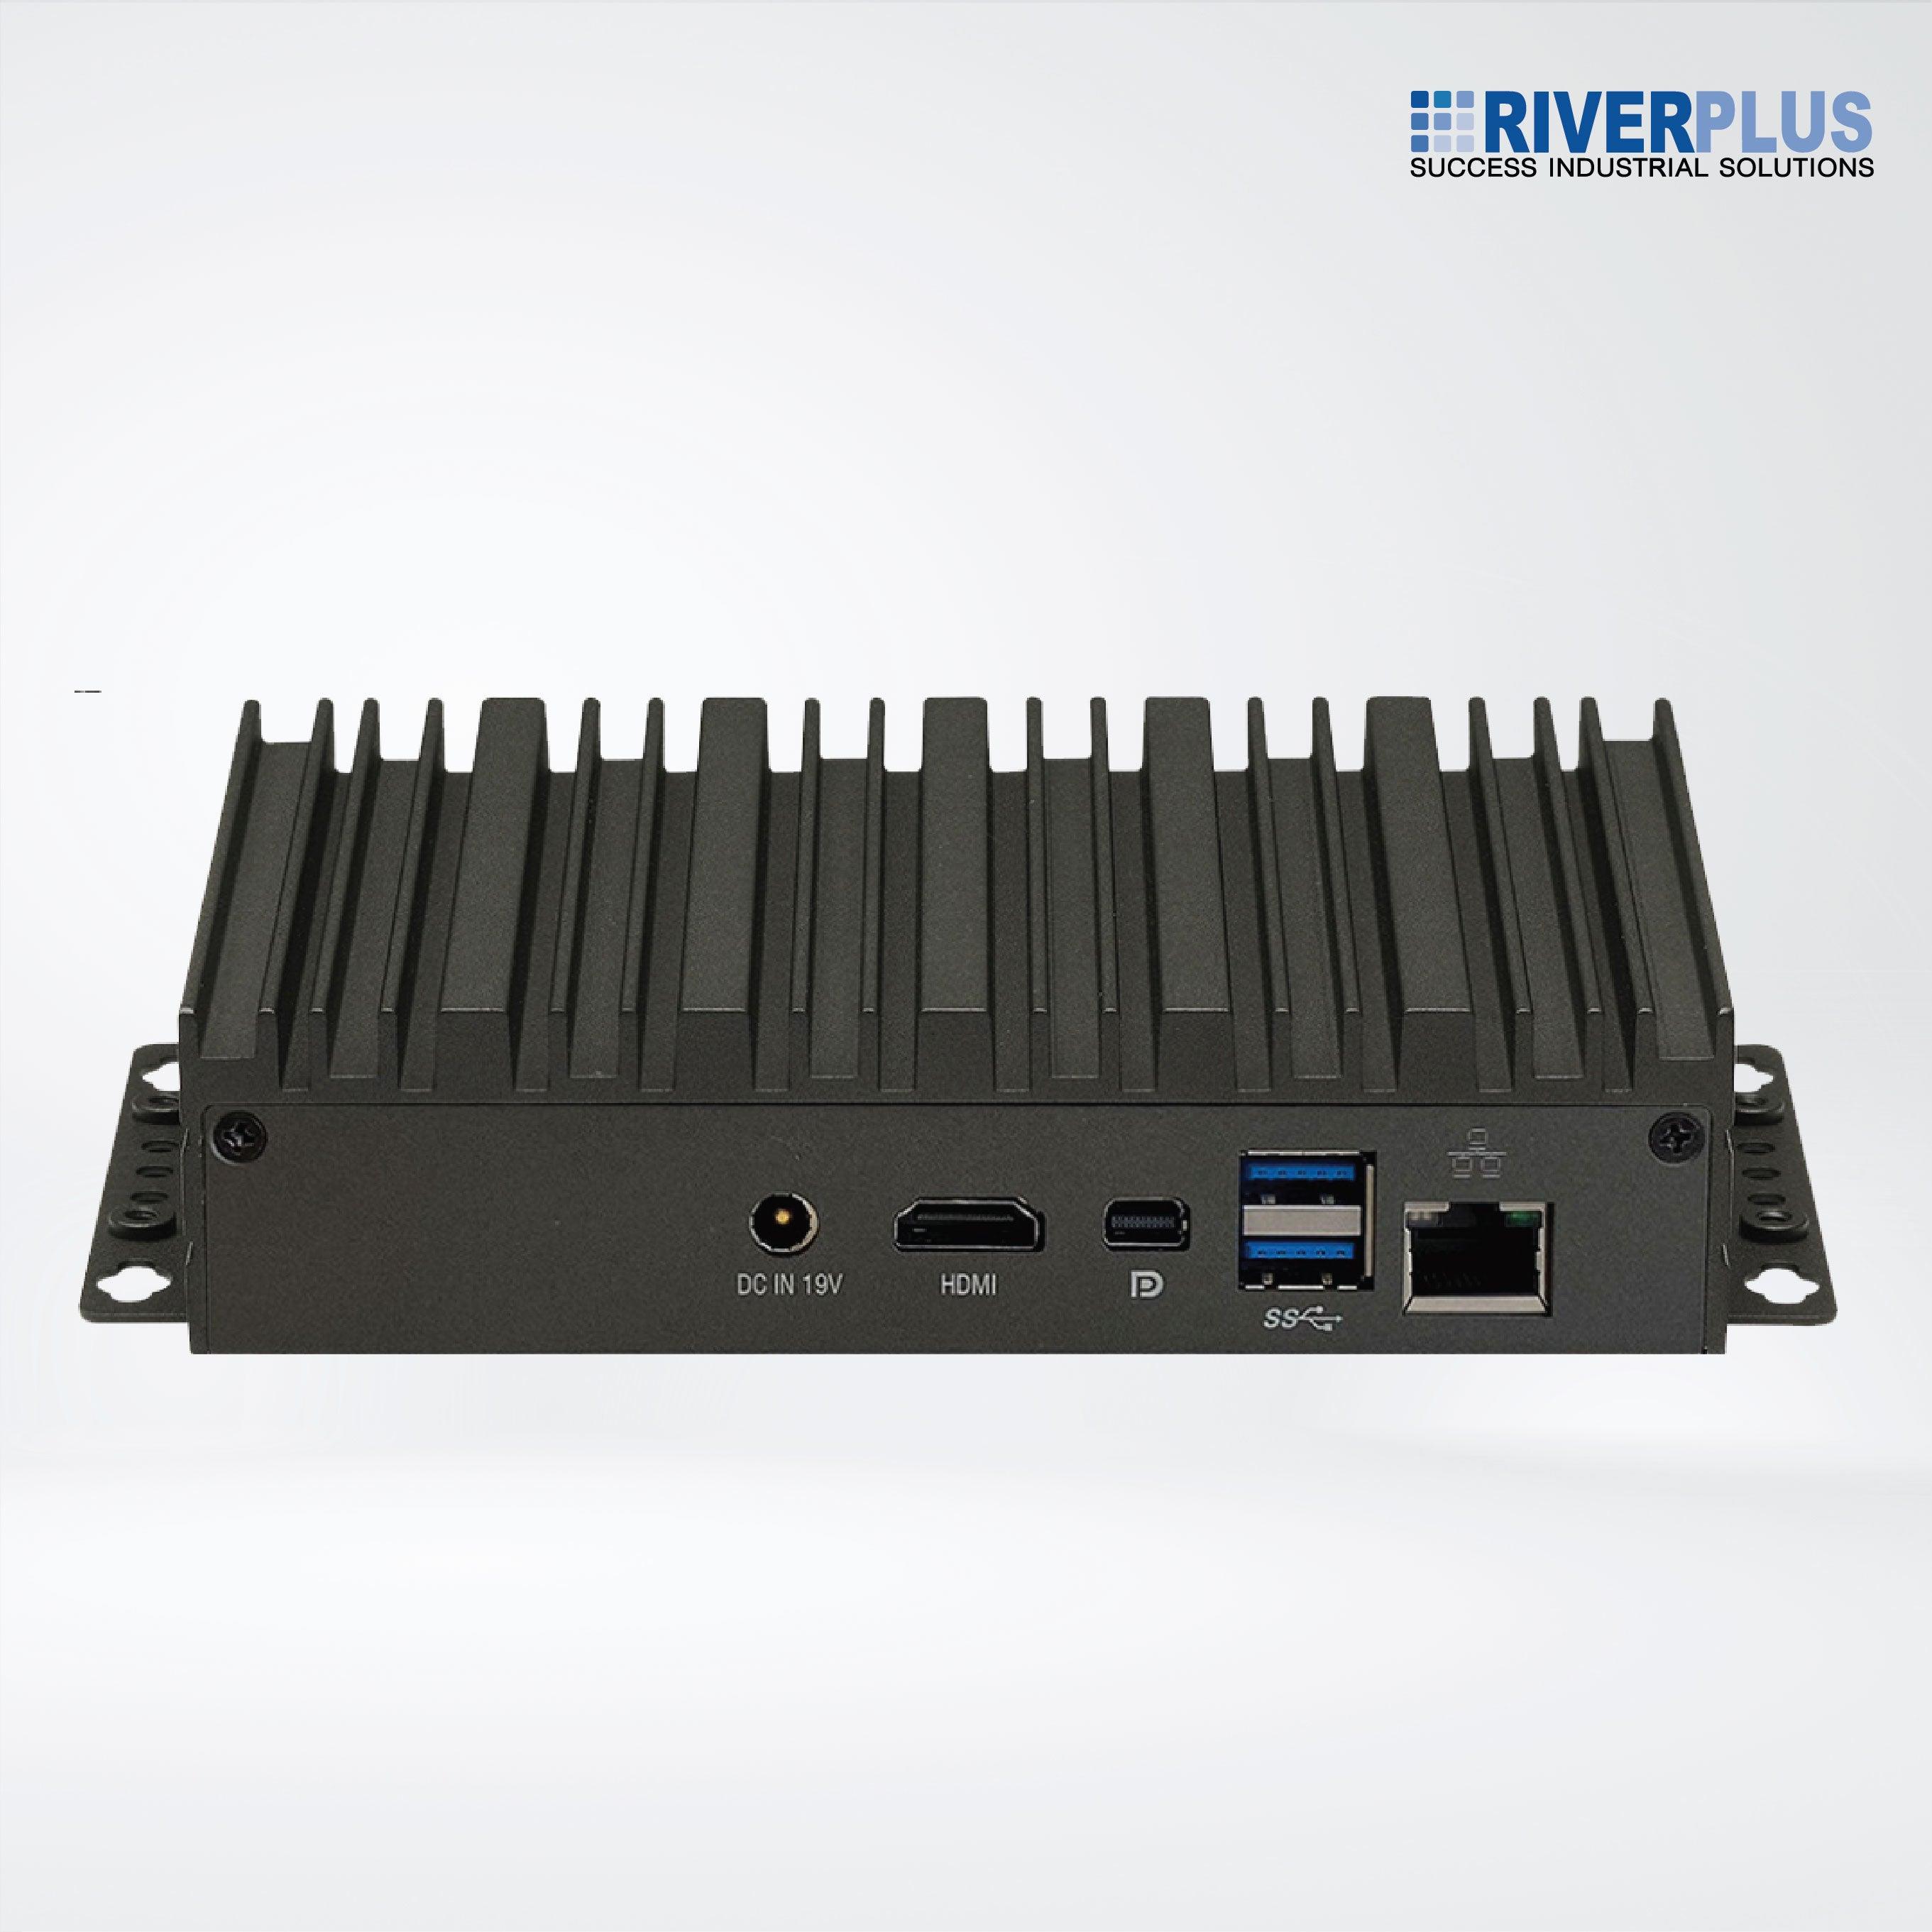 NDIS B318-S13 Fanless Embedded Computer Powered by Intel® Core™ i3-6100U SoC Processor - Riverplus